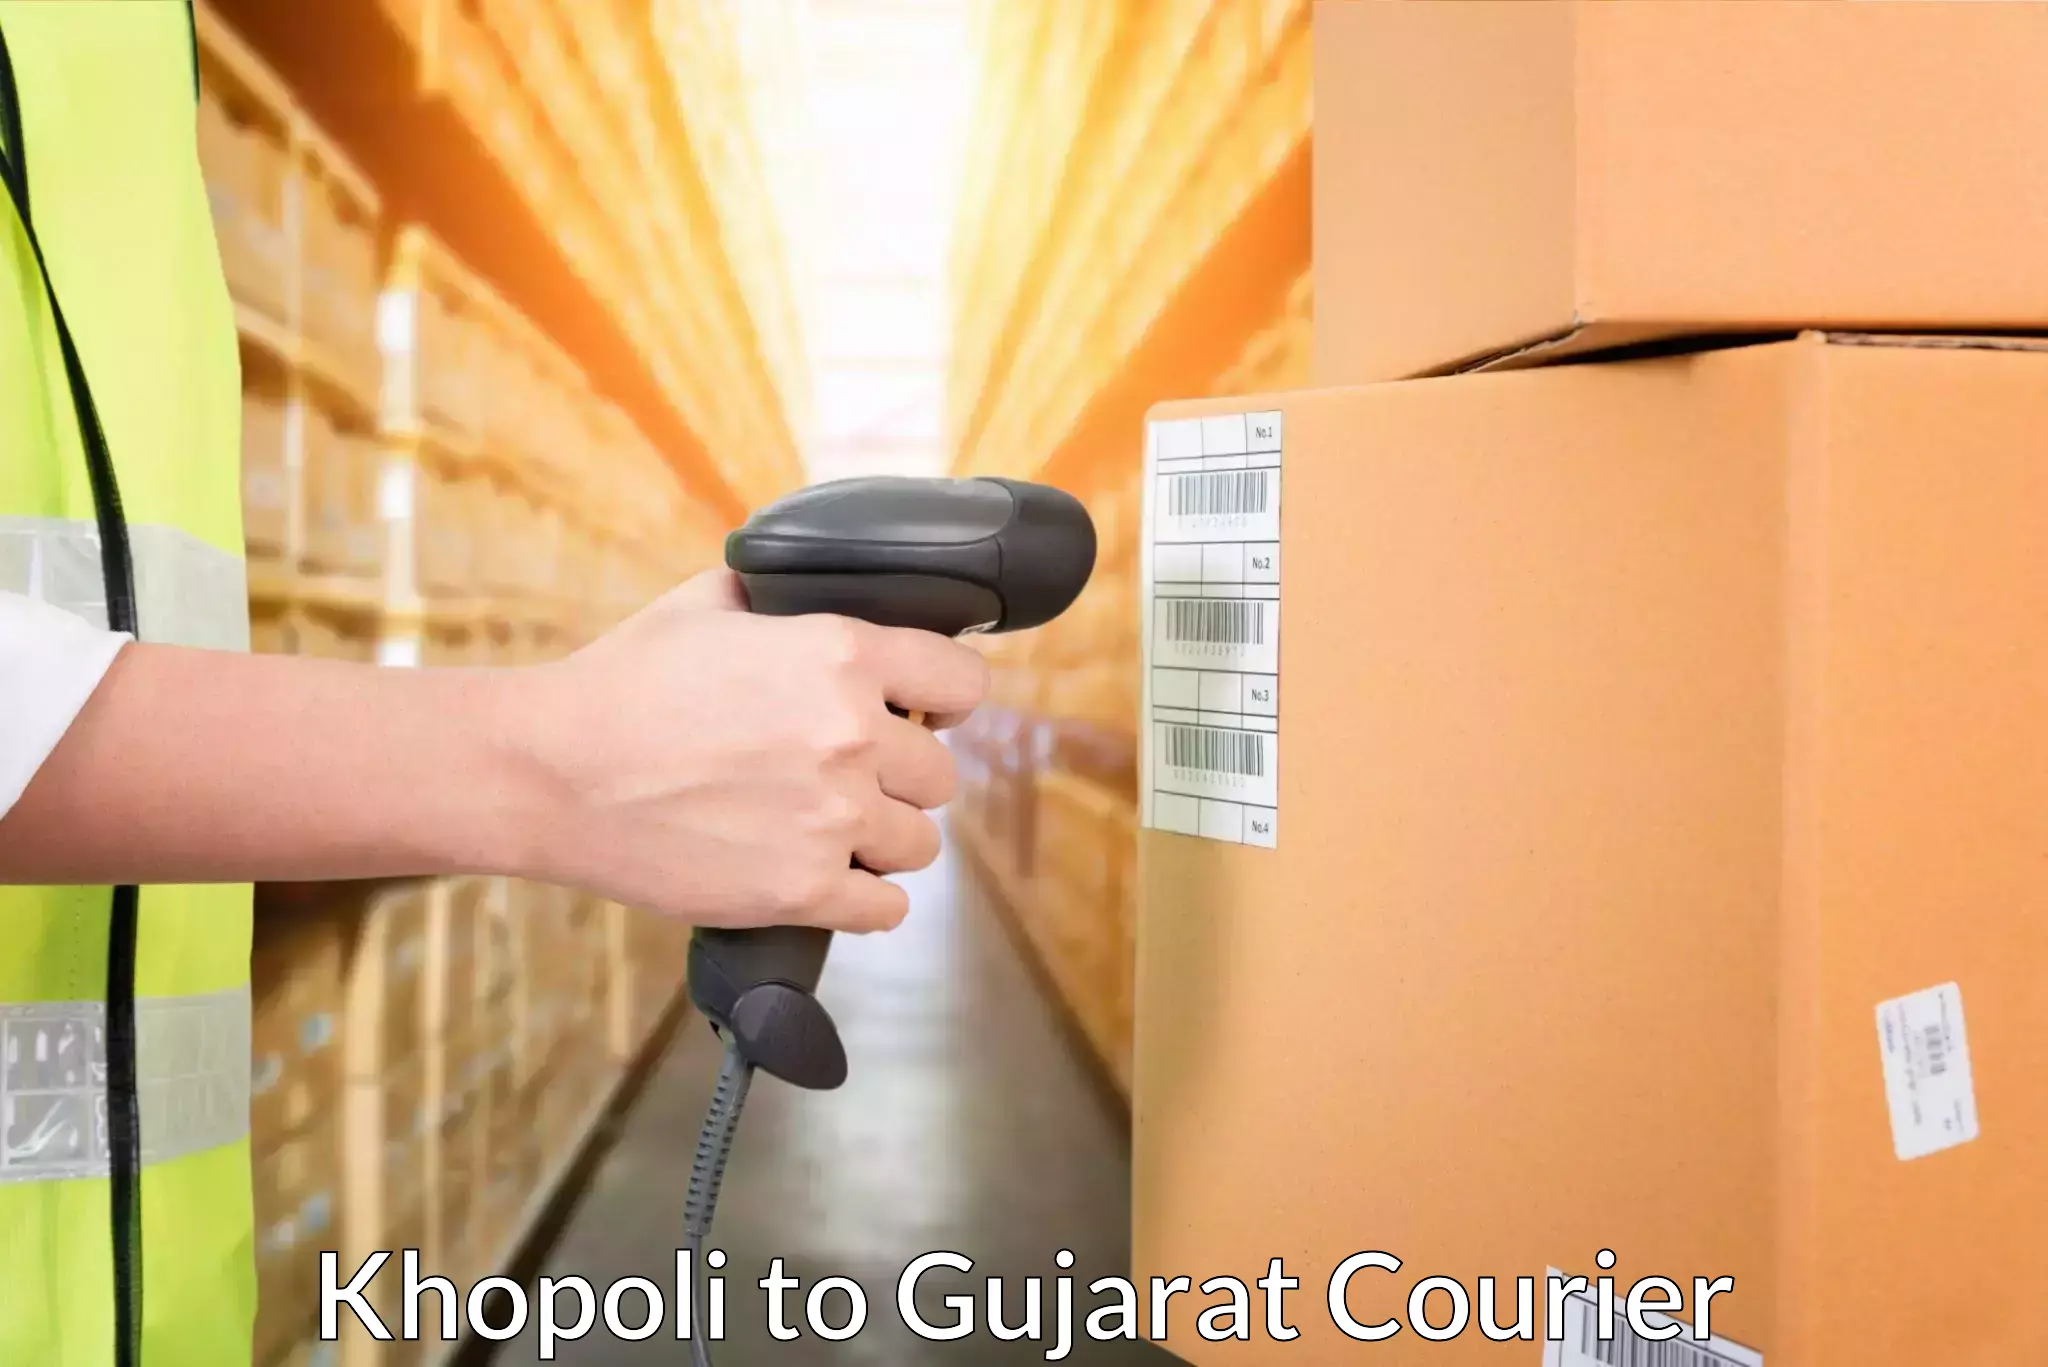 International parcel service Khopoli to Nadiad